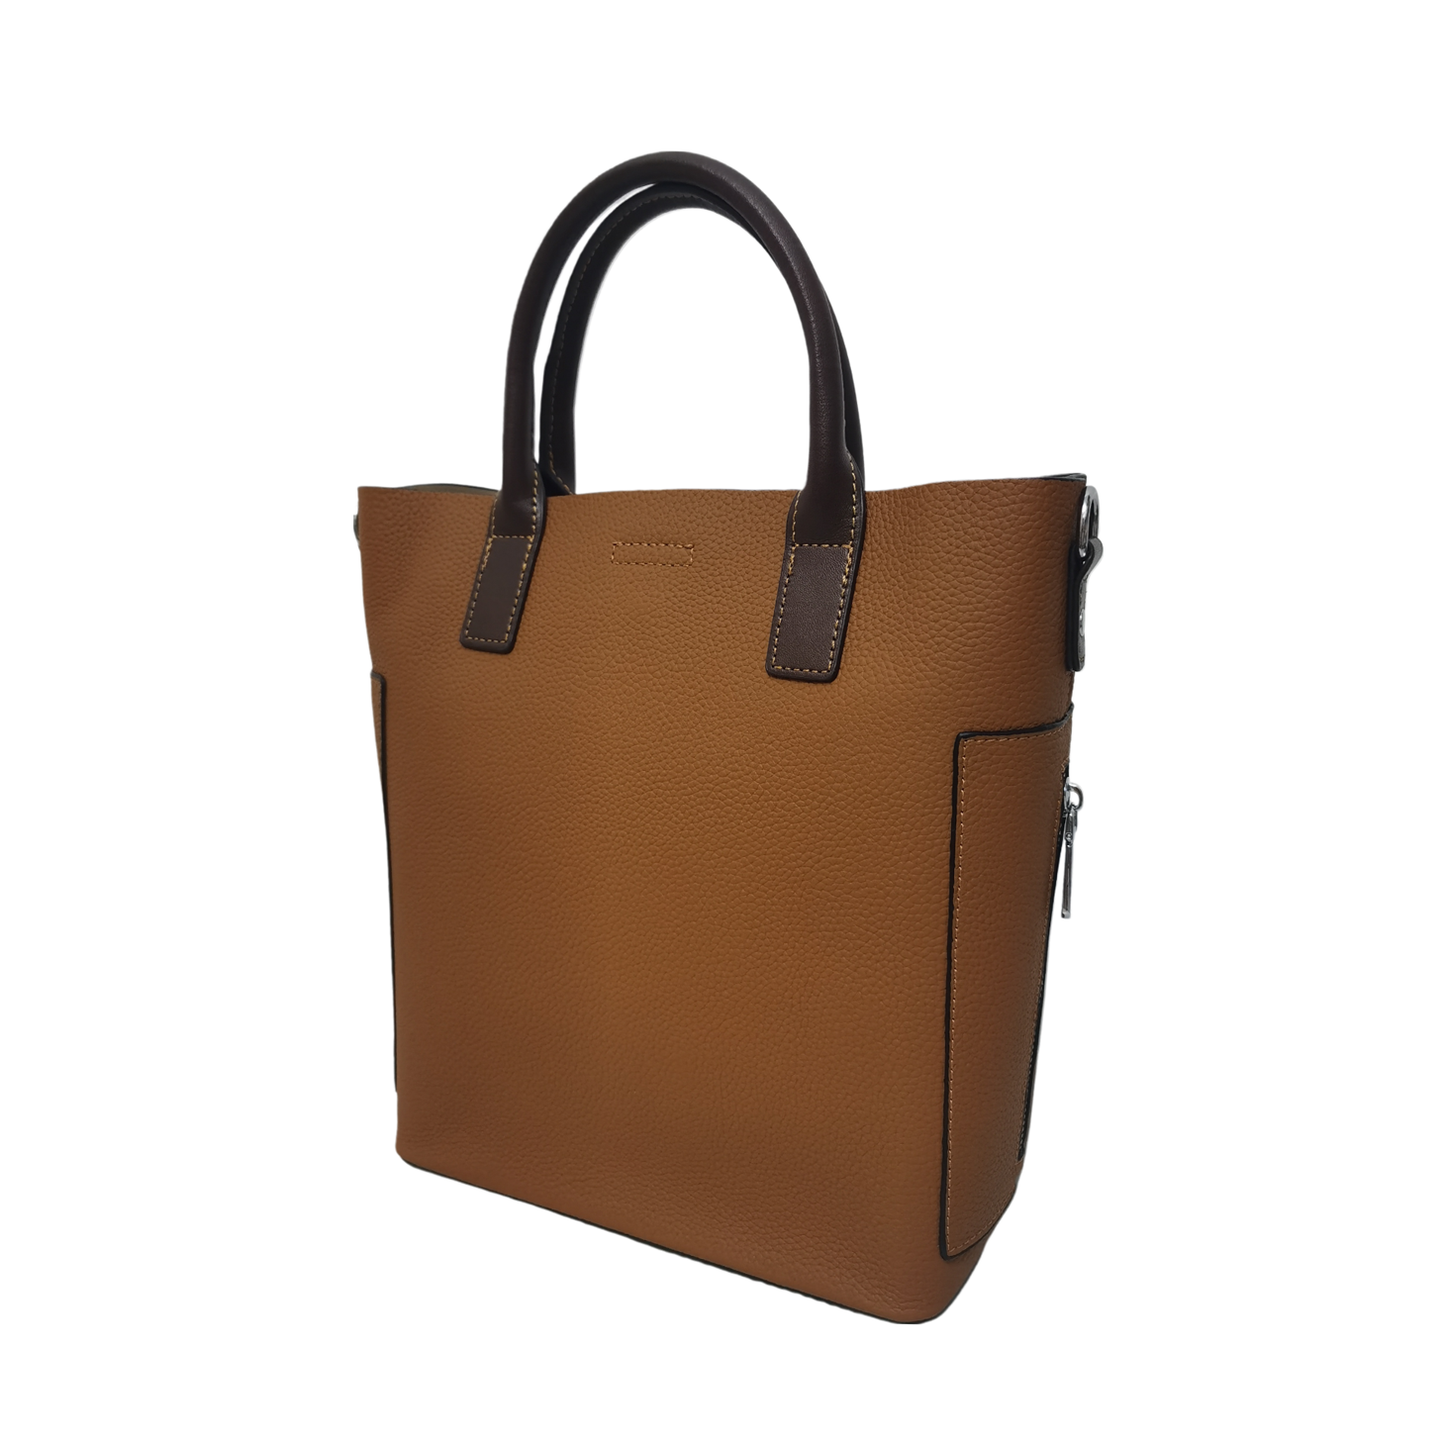 Women's genuine cowhide leather Handbag Perry V2 design